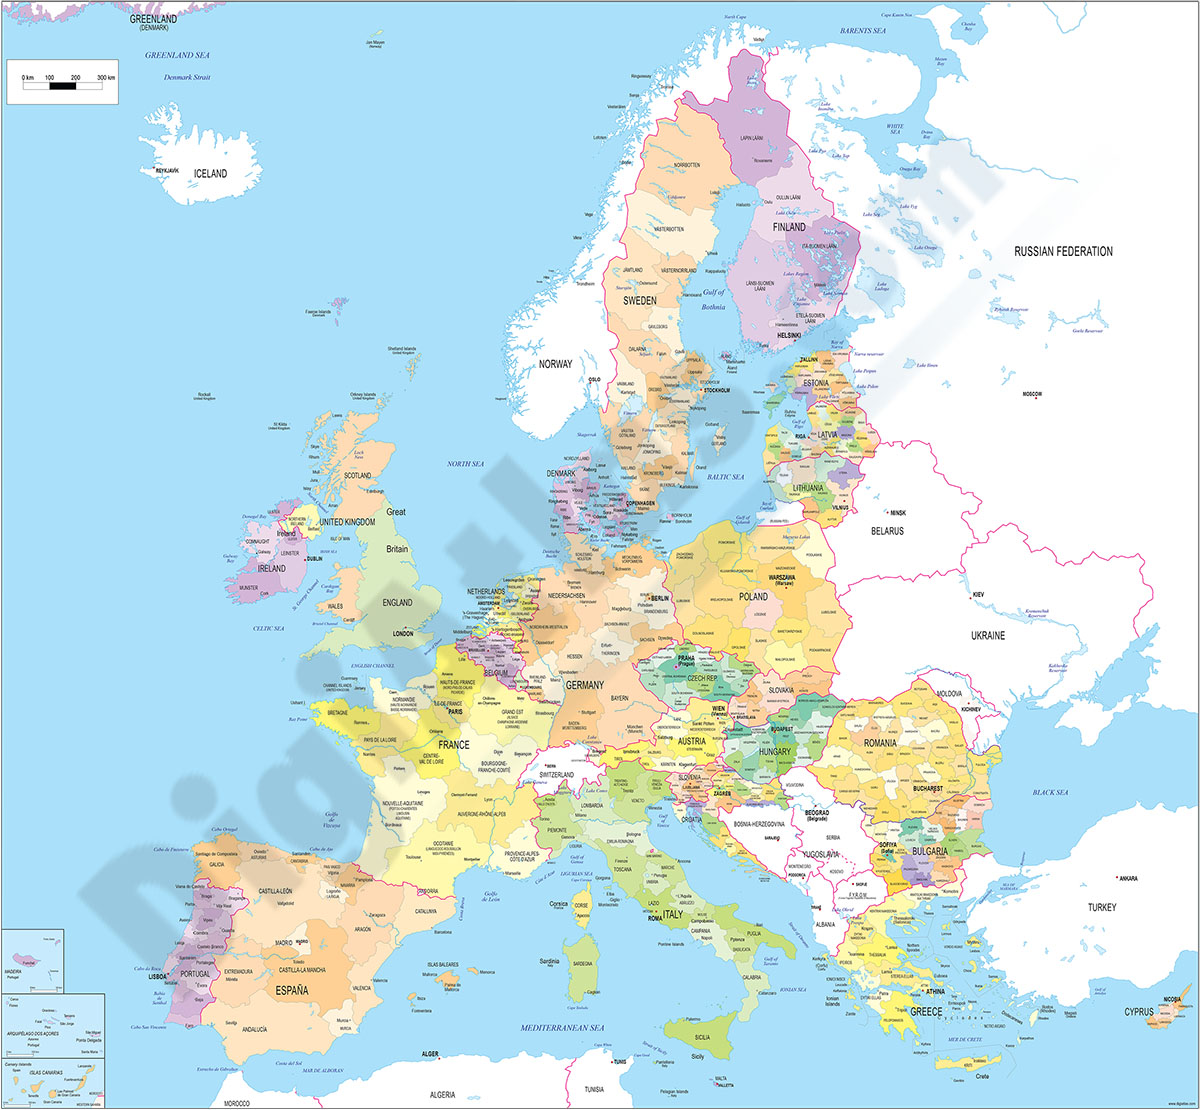 Europe Union regions map